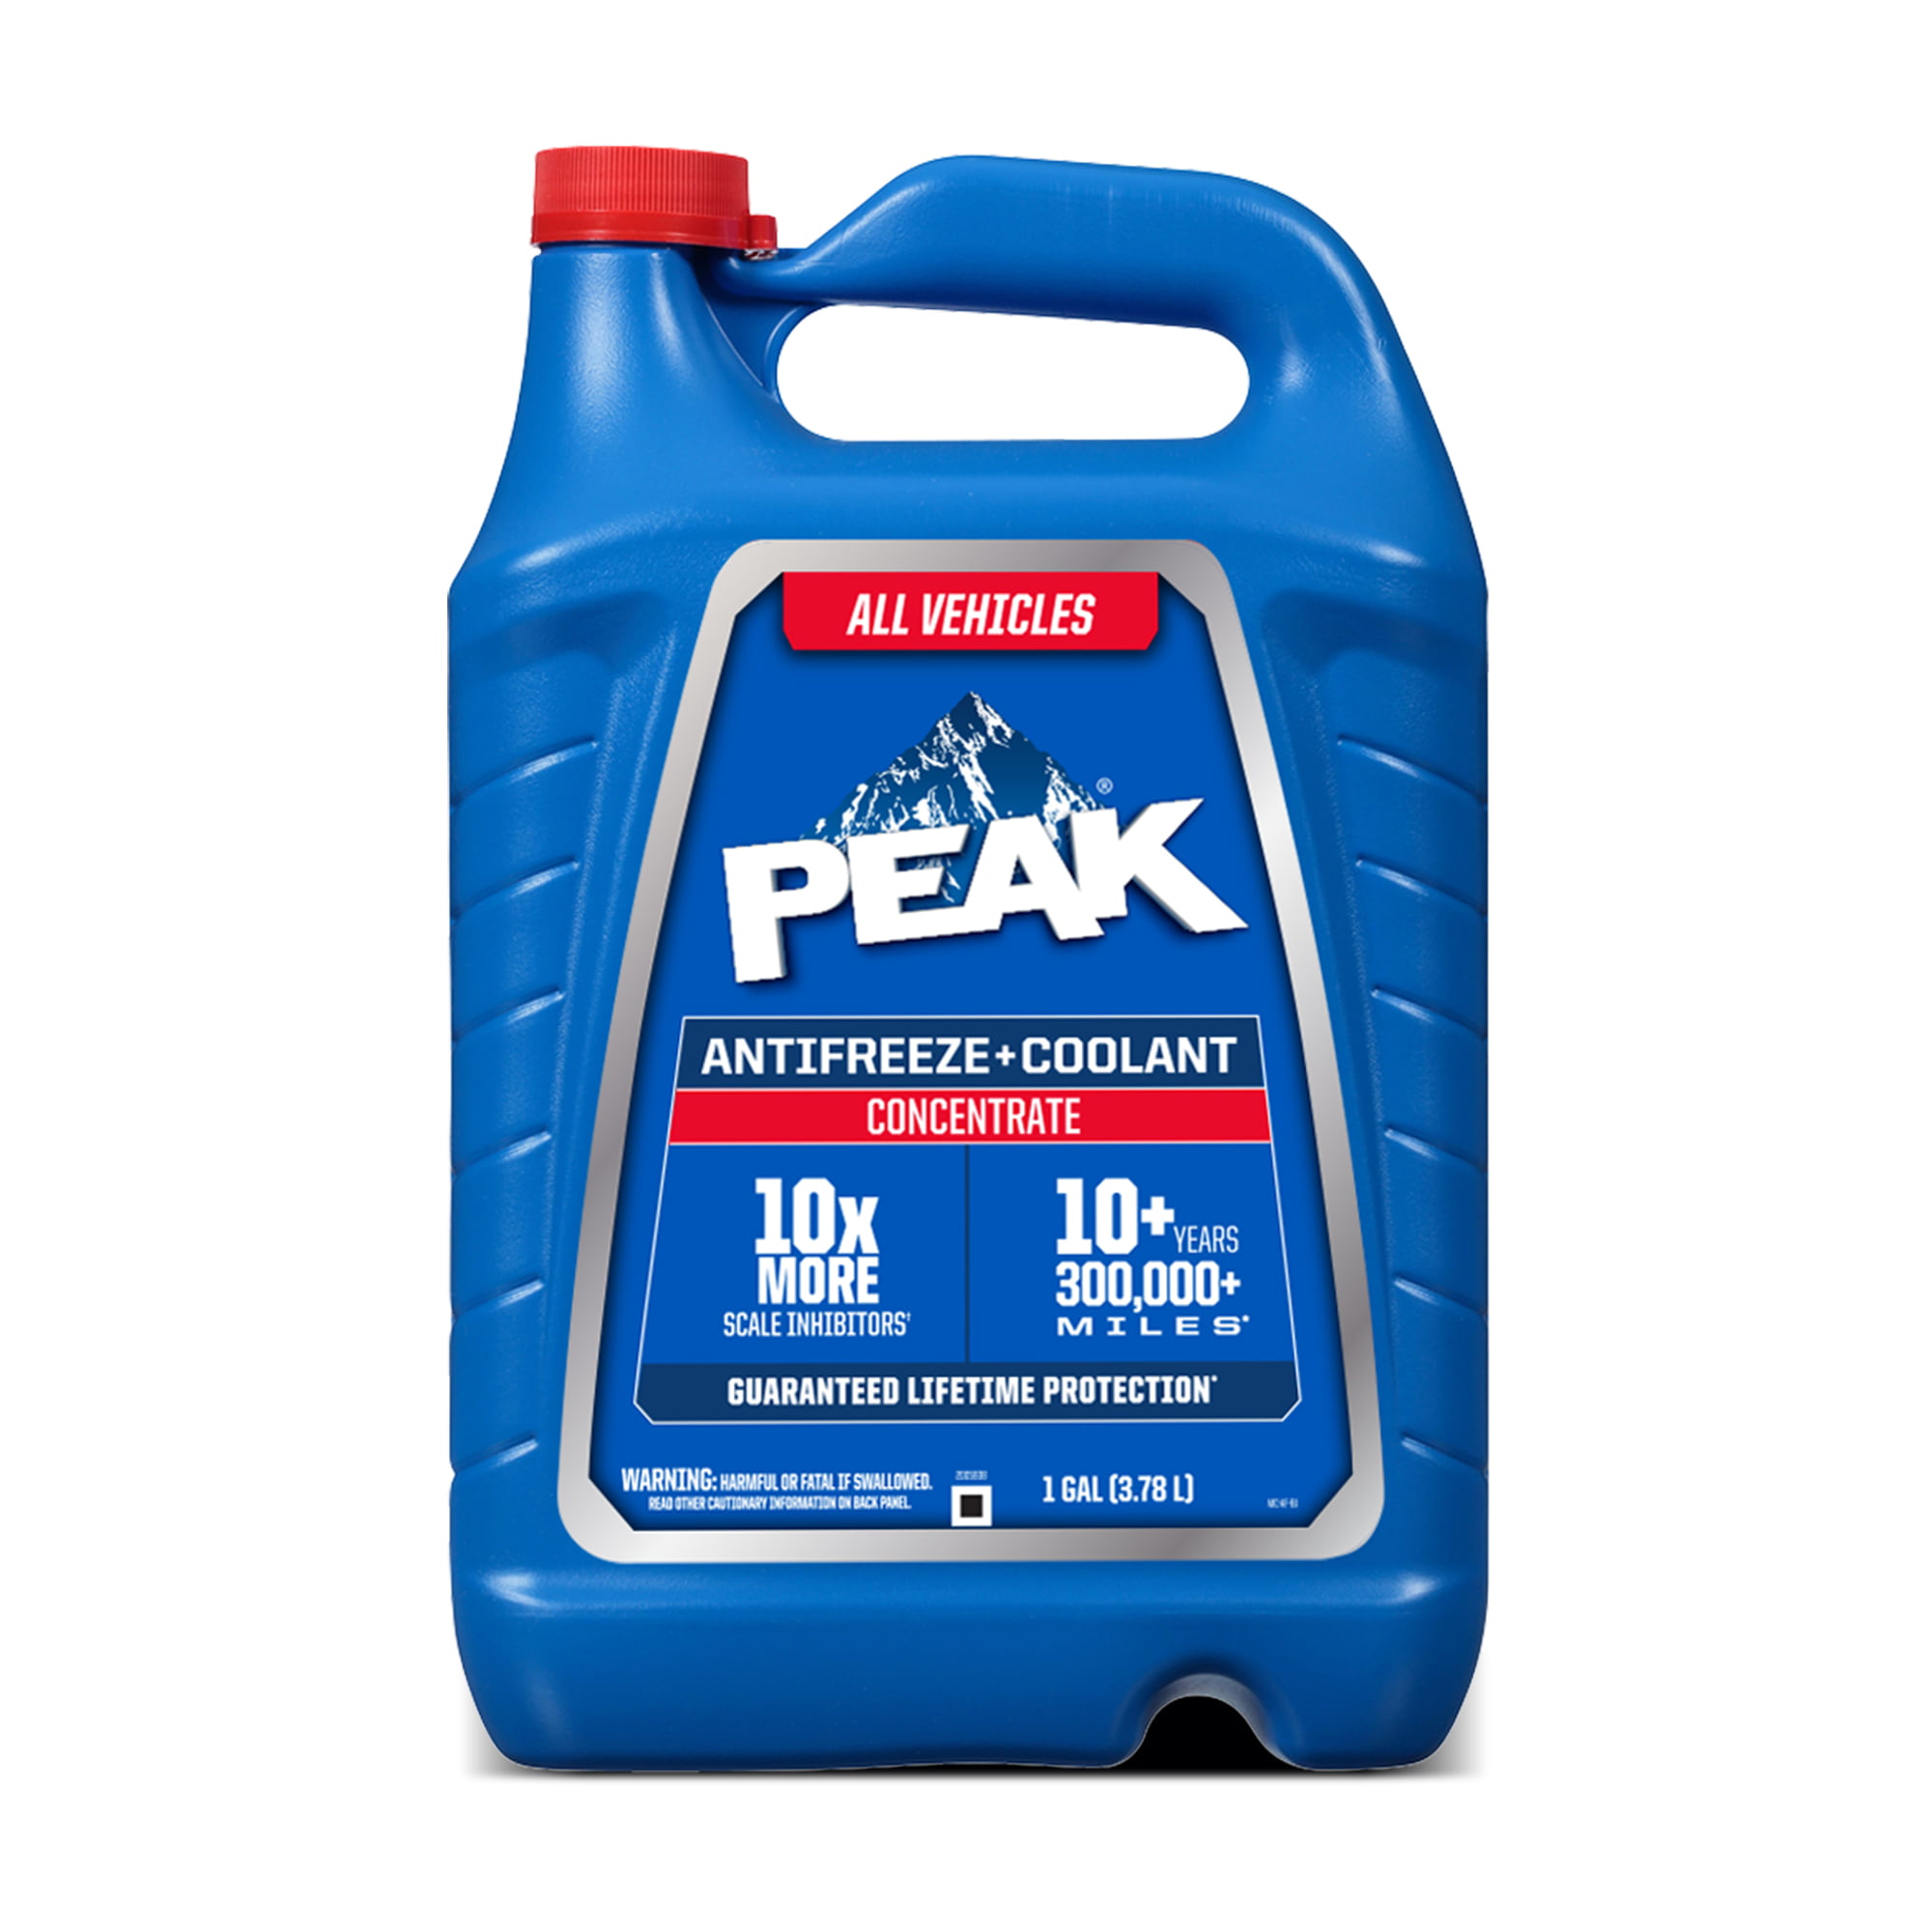 peak-premium-concentrate-antifreeze-coolant-walmart